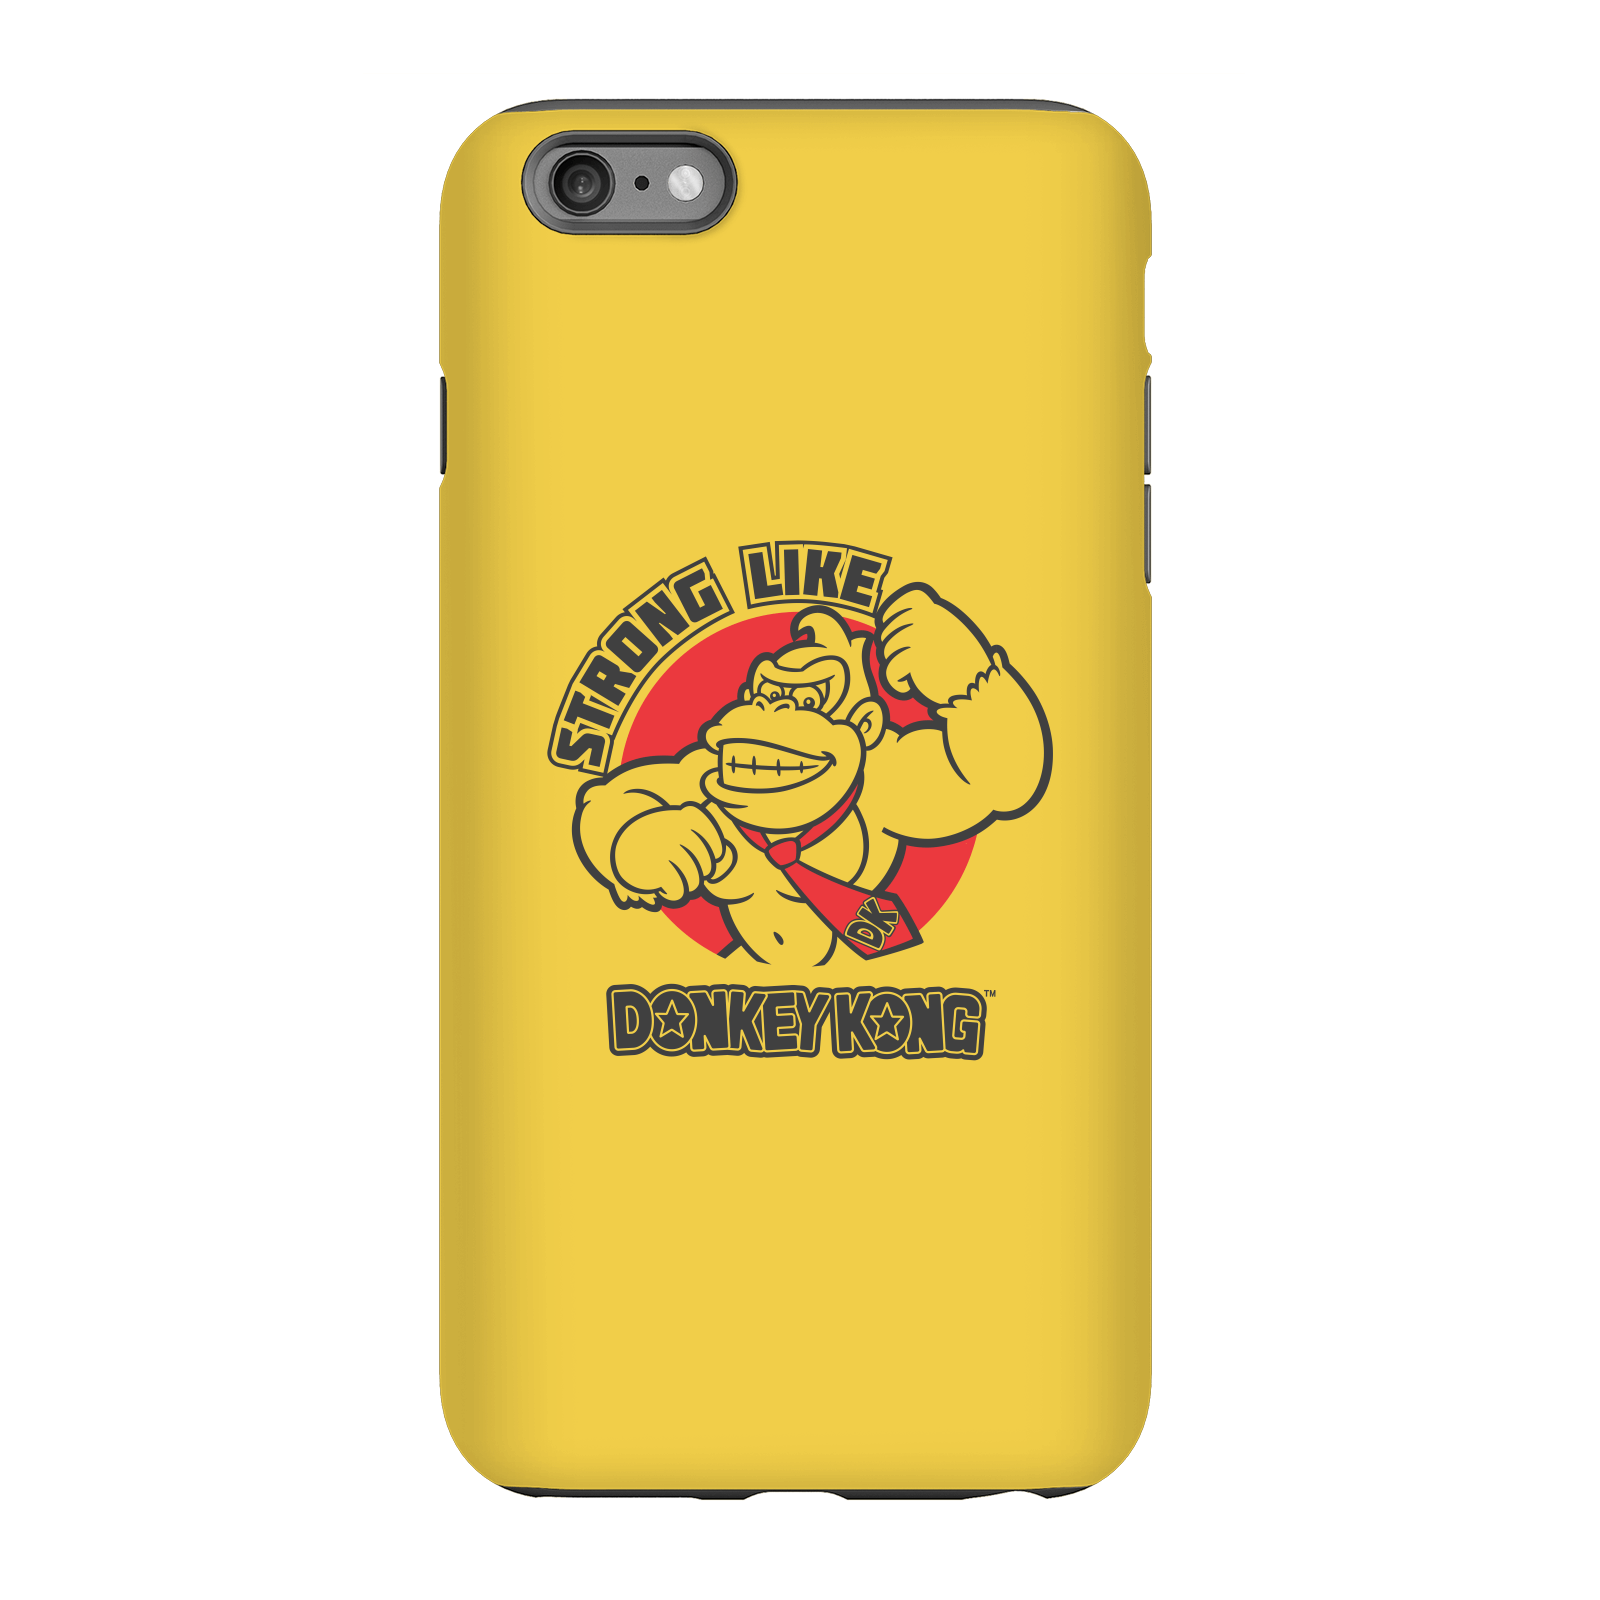 Nintendo Donkey Kong Strong Like Donkey Kong Phone Case - iPhone 6 Plus - Tough Case - Matte